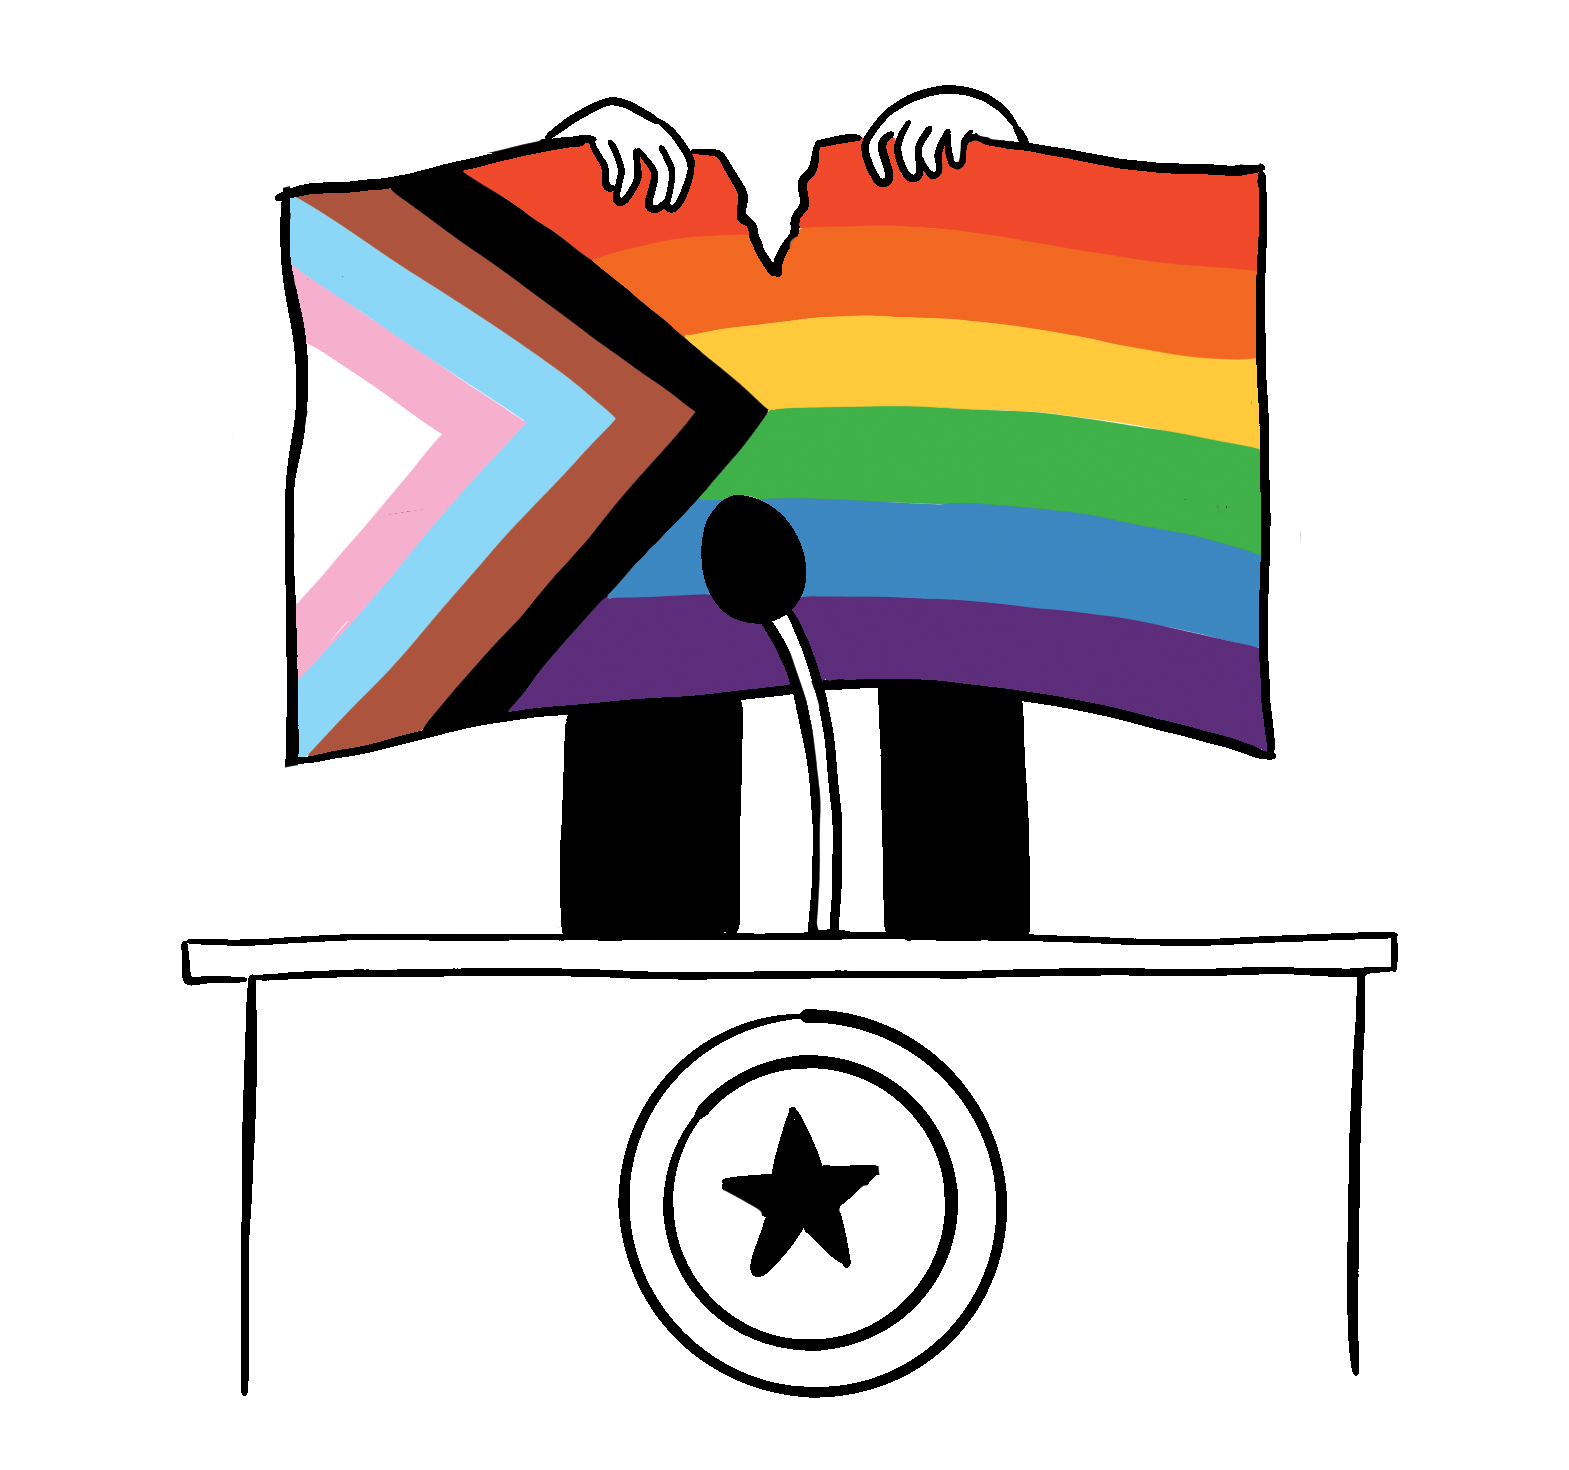 A cartoon lawmaker standing behind a Lone Star podium tears a Progressive Pride flag in half.